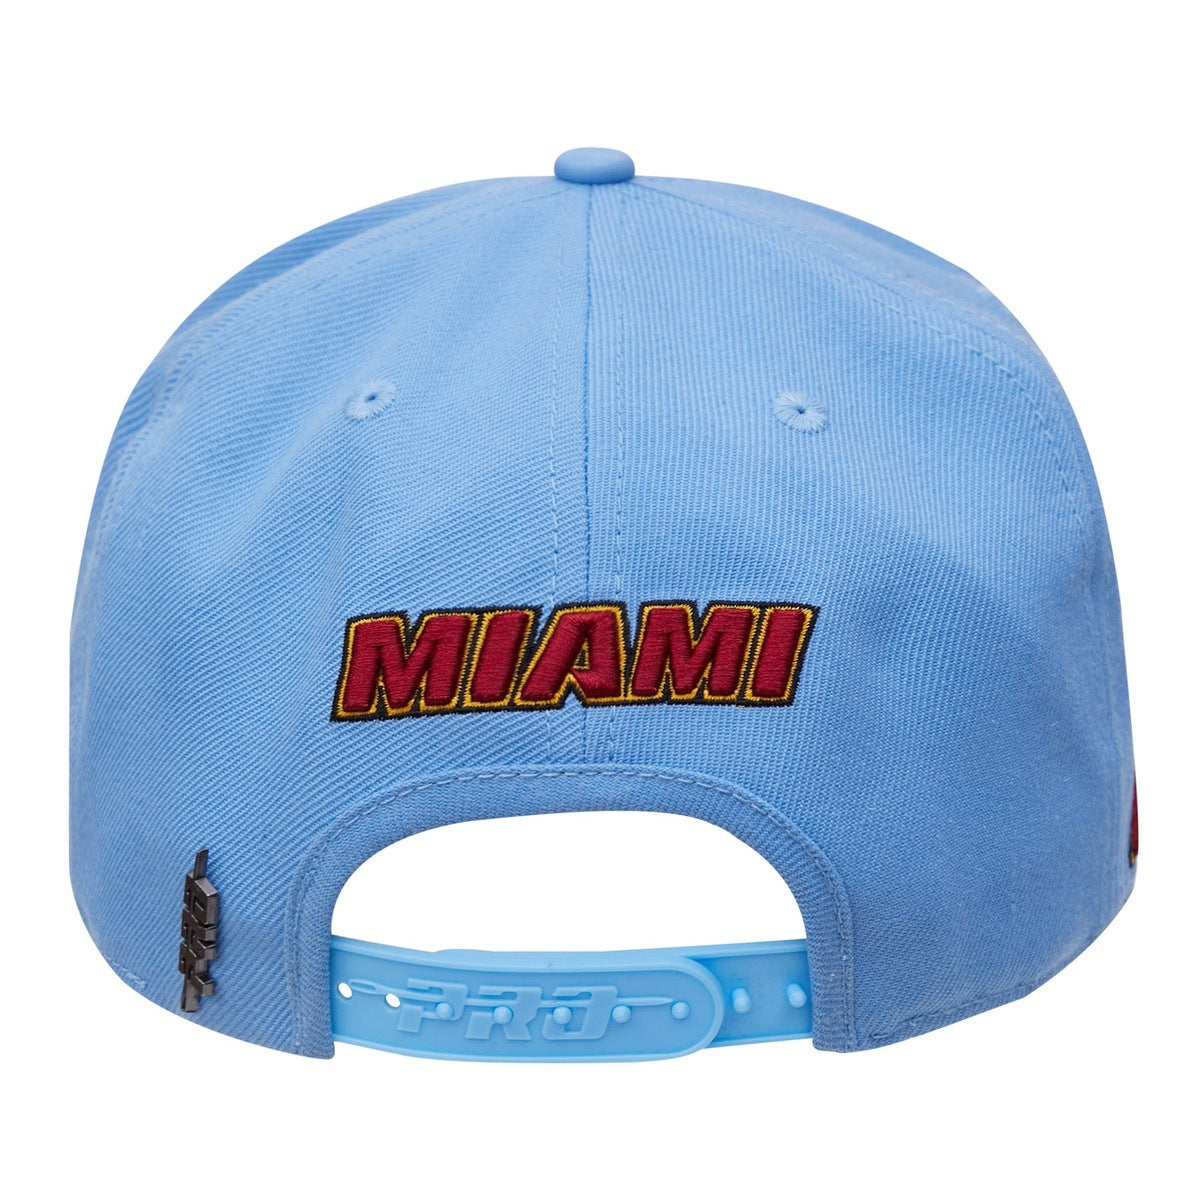 Miami Heat Pro Standard Mashup Logos Snapback Hat - Black